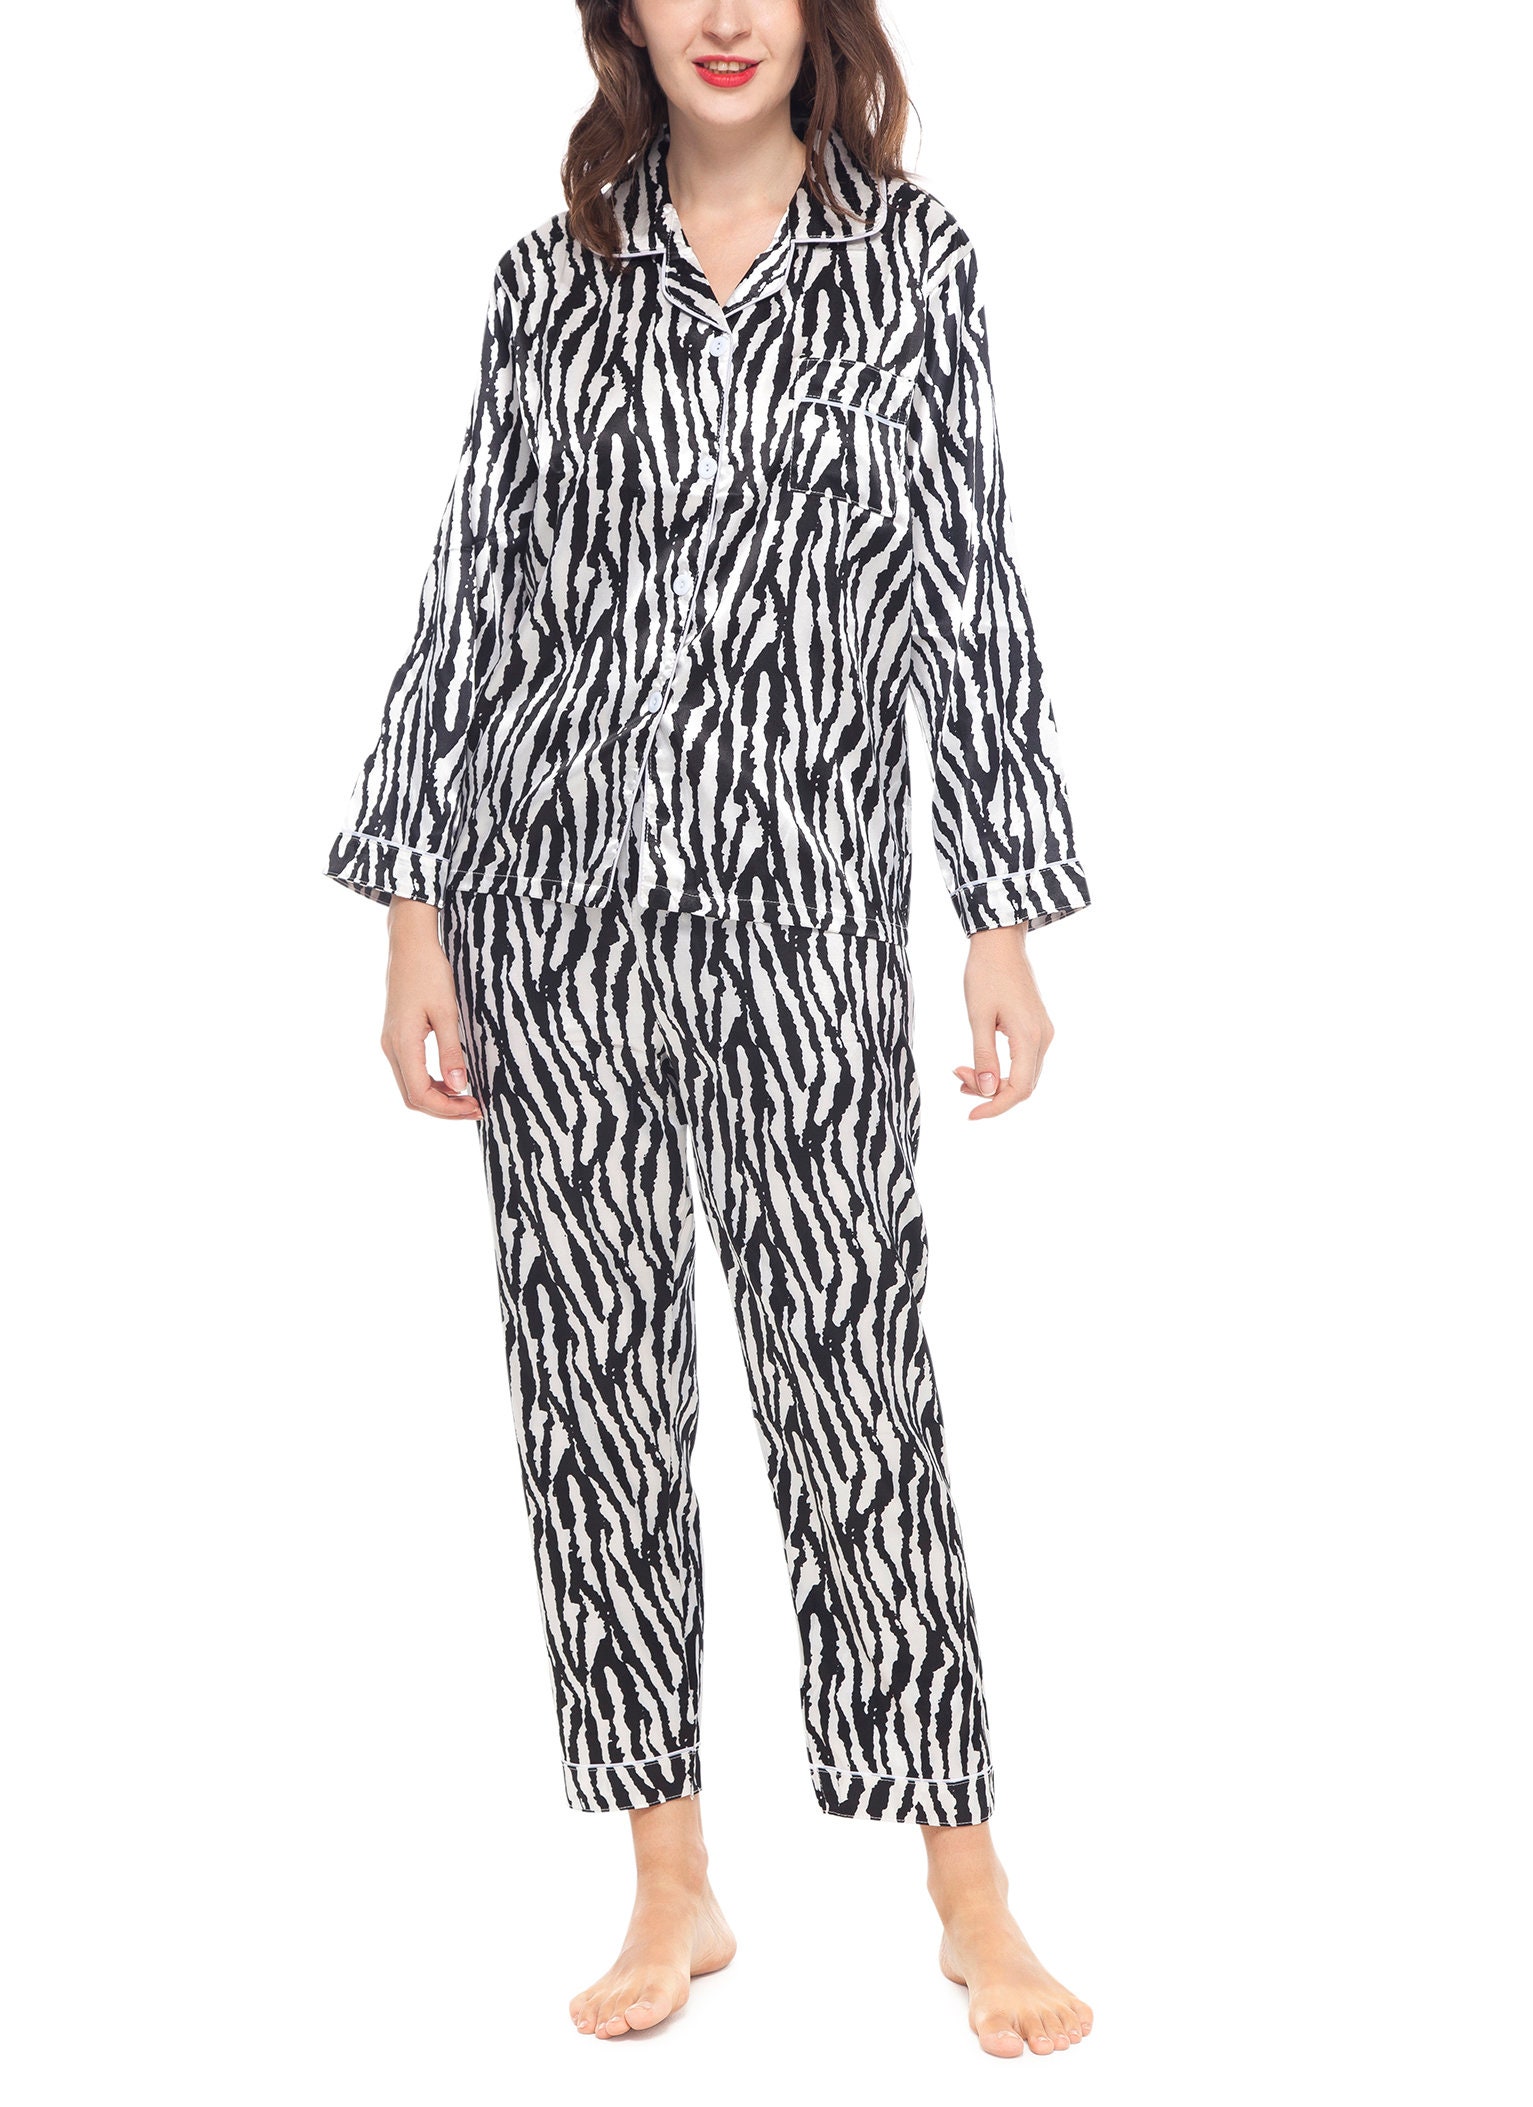 Zebra Pajama Pants - Etsy